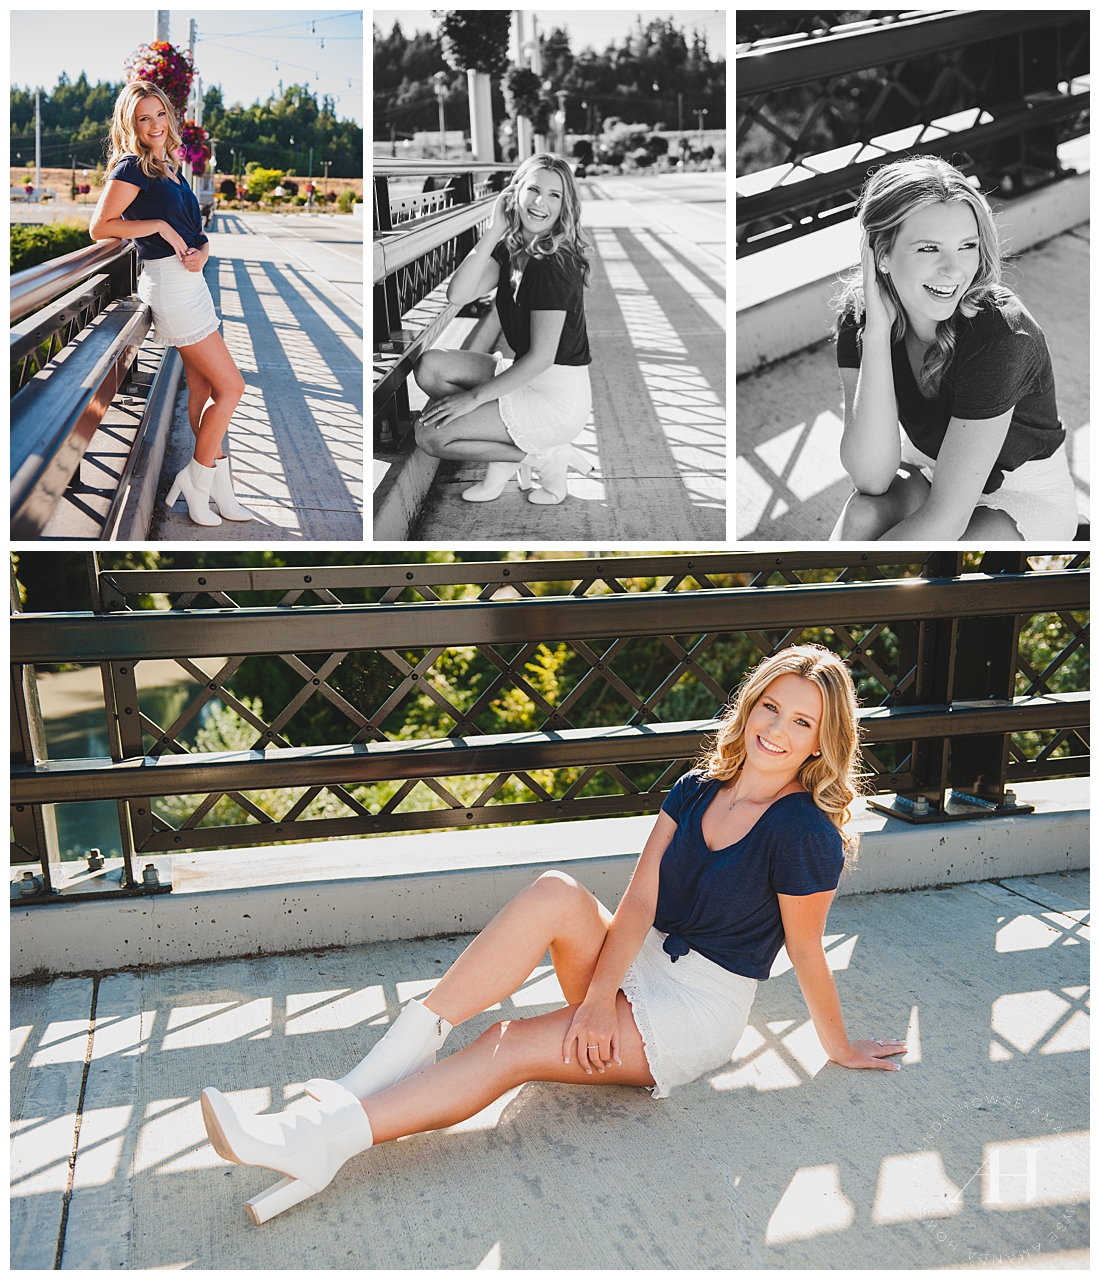 Posing on a Sumner Bridge | Outdoor Senior Portraits, Pose Ideas for Senior Girls, Outfit Inspiration, Casual Outfits for Senior Portraits | Photographed by Tacoma Senior Photographer Amanda Howse